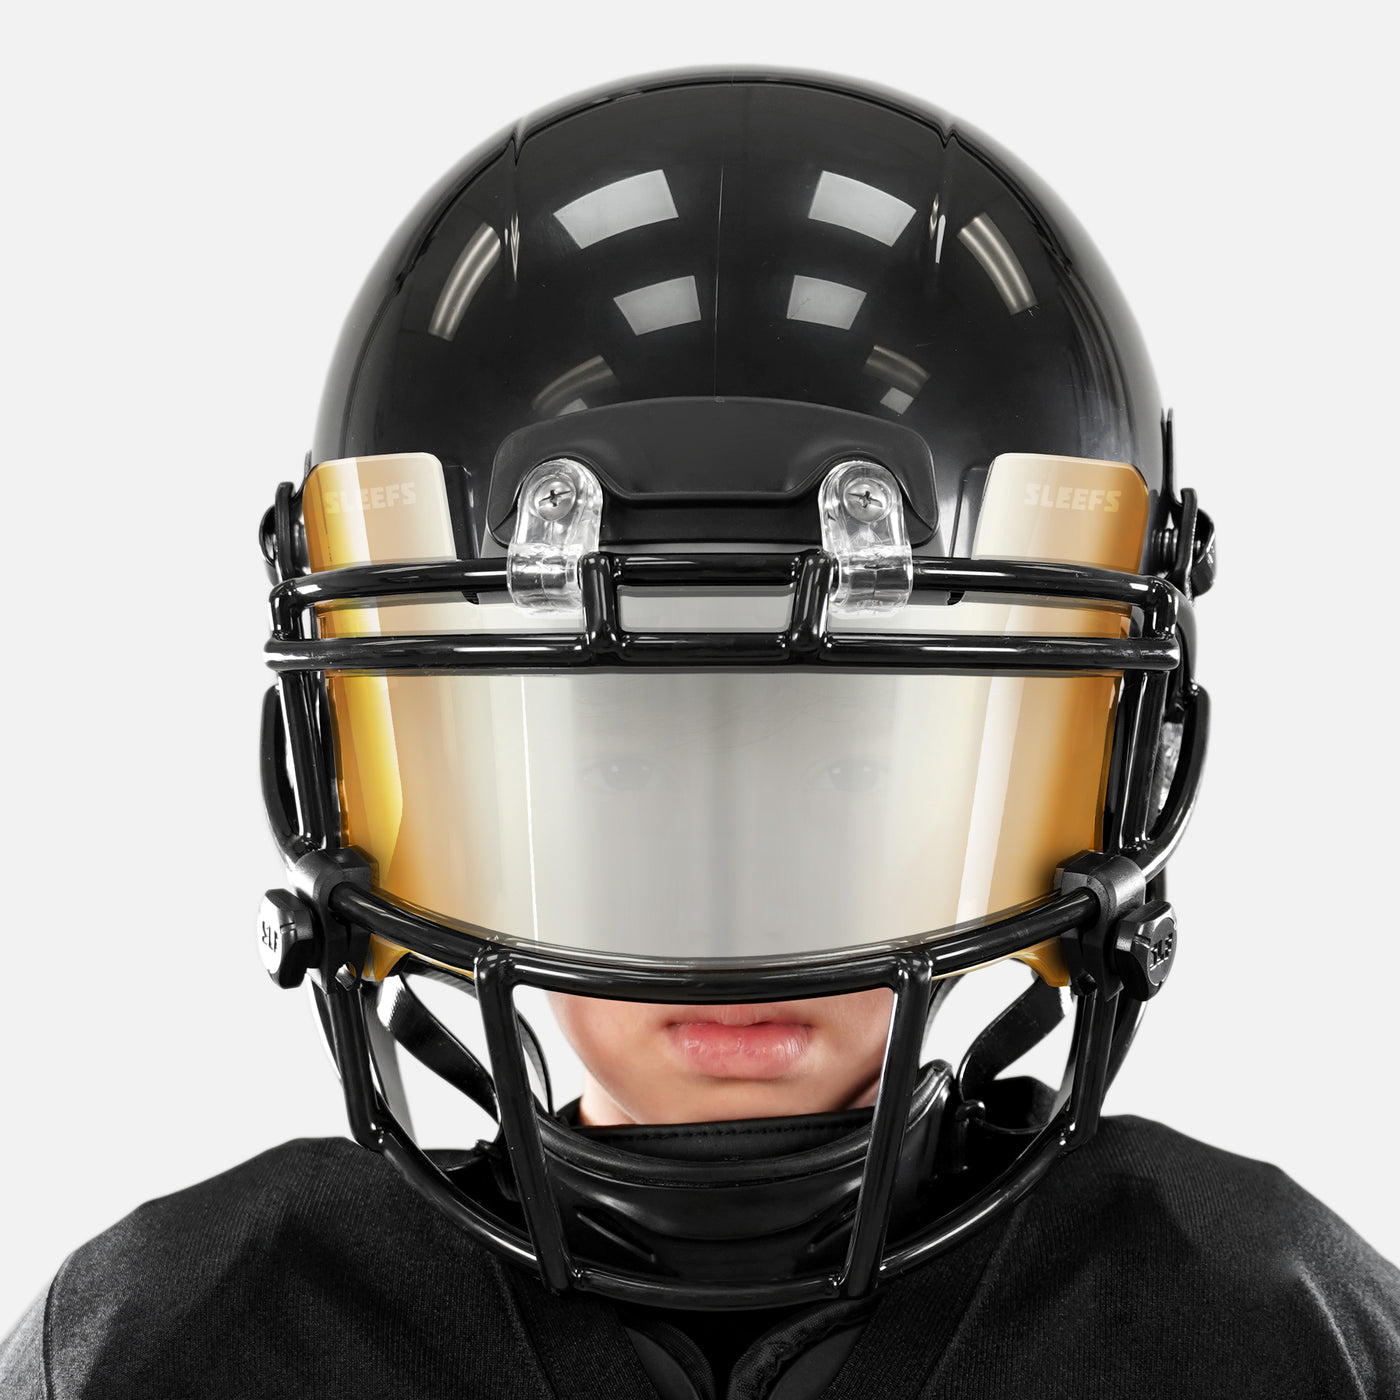 Tiger Orange Machine Silver Helmet Eye-Shield Visor for Kids